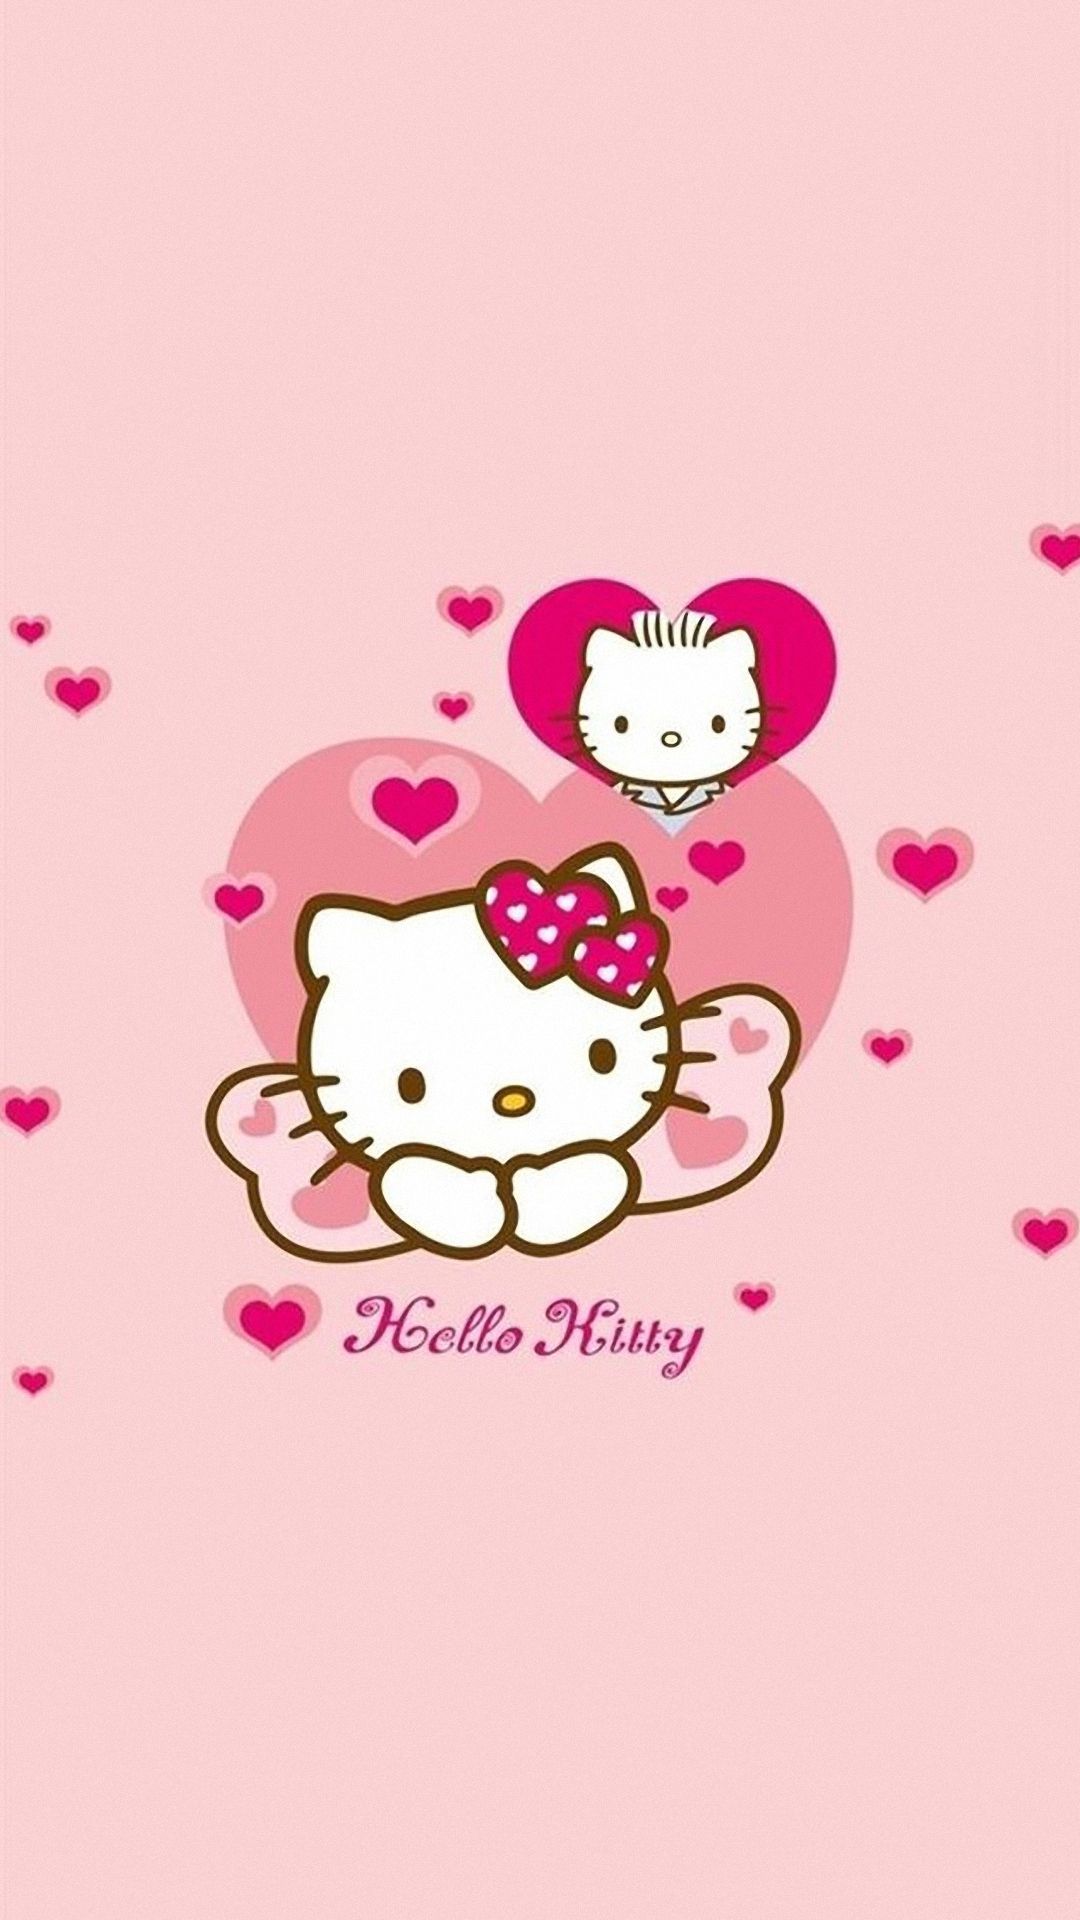 46+] Hello Kitty Cute Wallpaper - WallpaperSafari